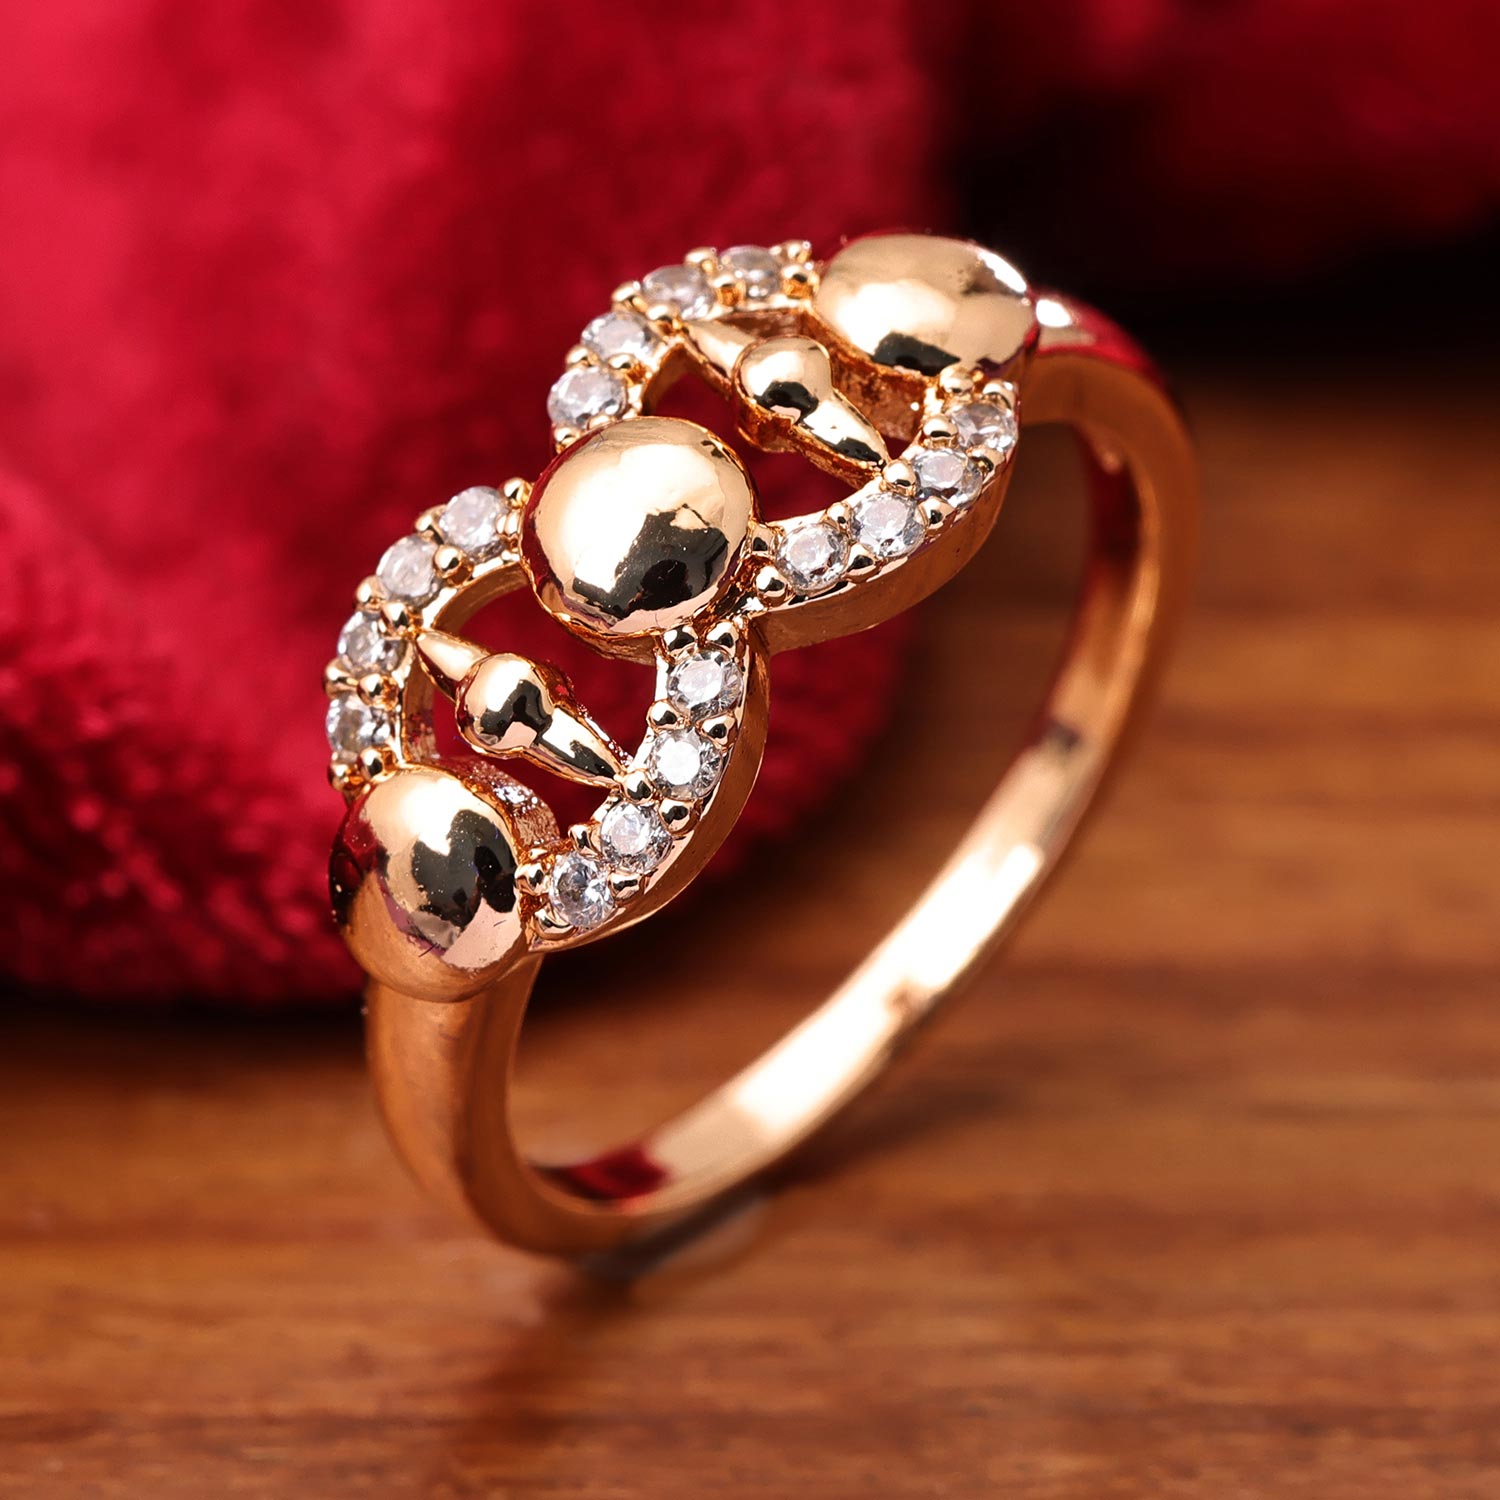 1 Gram Gold Plated Heart with Diamond Beautiful Design Ring for Ladies -  Style LRG-049 at Rs 600.00 | सोने का पानी चढ़ी हुई अंगूठी - Soni Fashion,  Rajkot | ID: 2852104163591